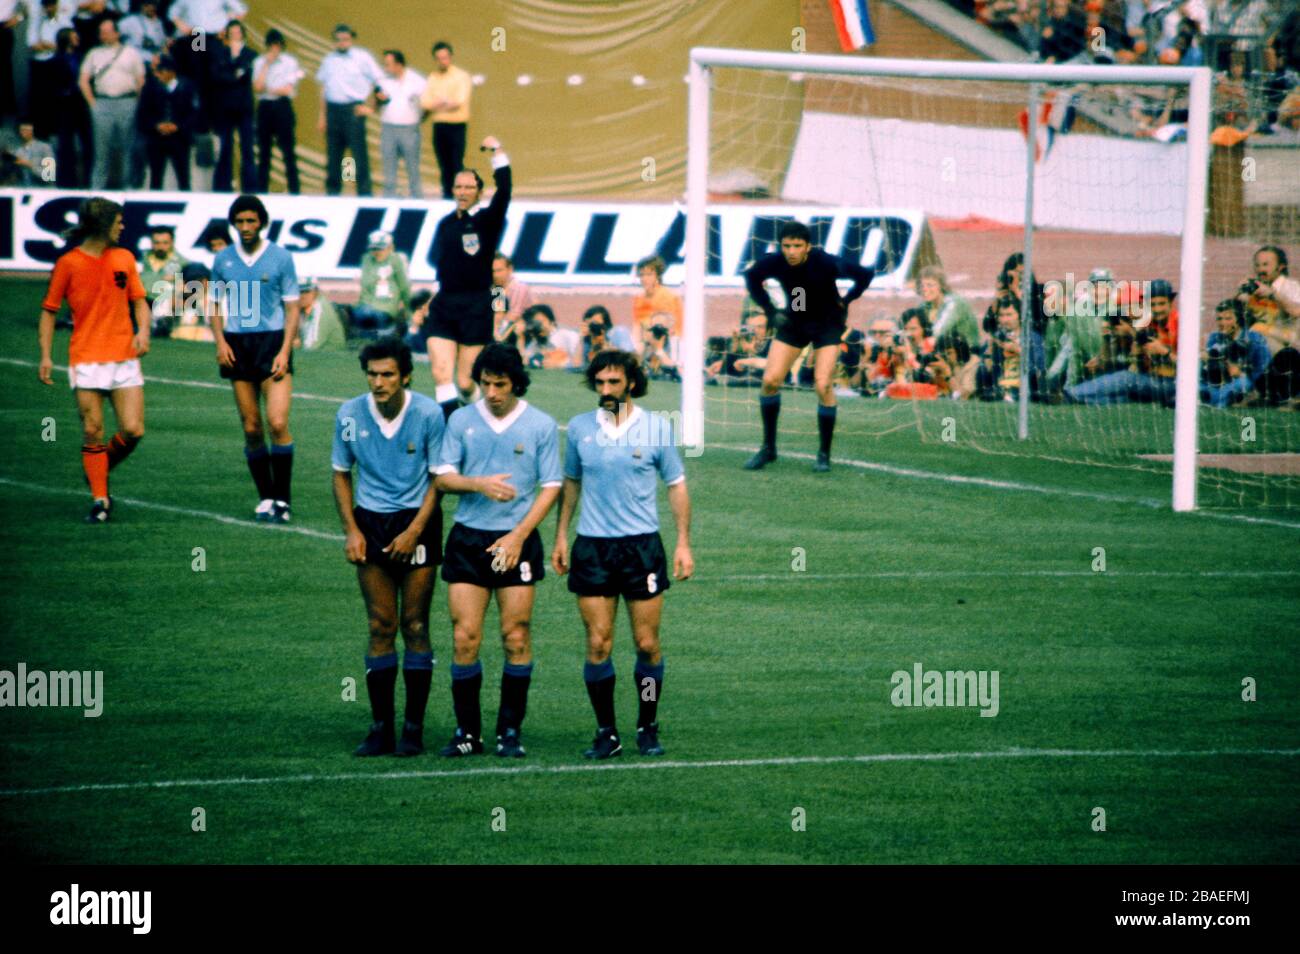 The Uruguay wall (l-r), Pedro Rocha, Victor Esparrago and Ricardo Pavoni, defend a free kick, watched by goalkeeper Ladislao Mazurkiewicz (r) Stock Photo